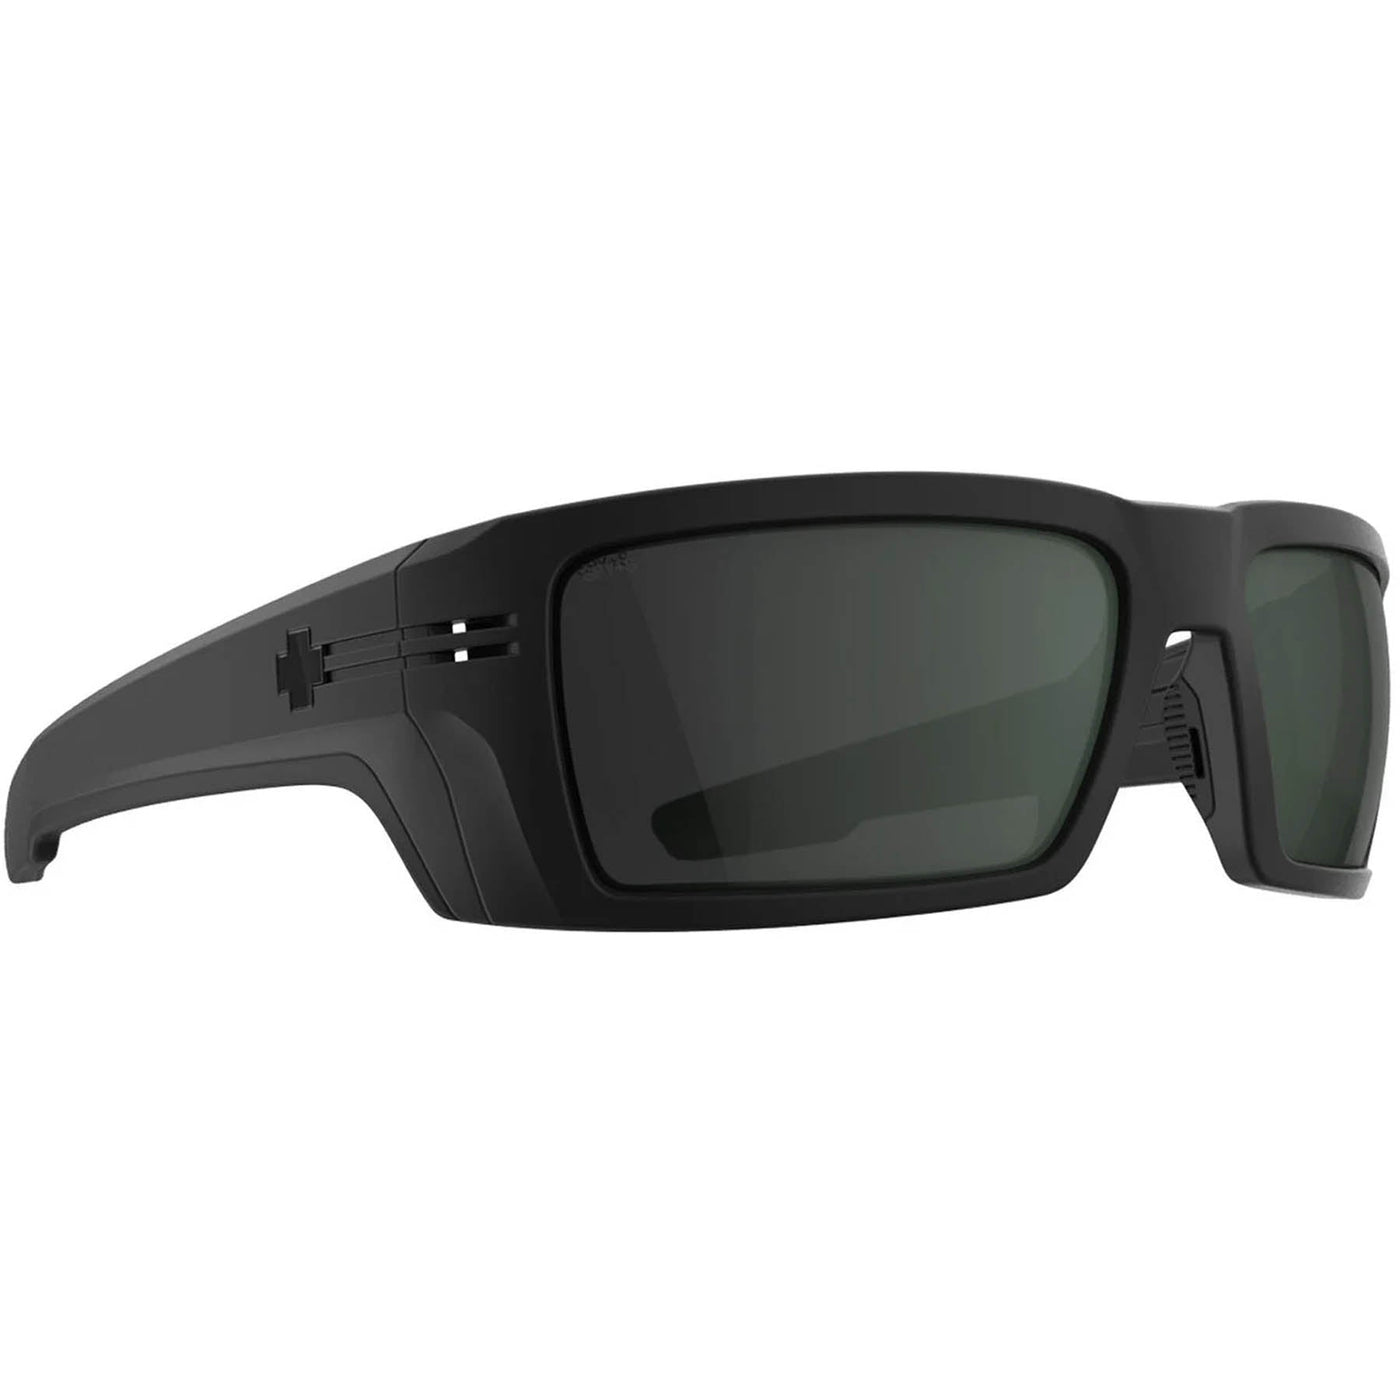 SPY REBAR SE ANSI Sunglasses, Happy Lens - Gray/Green 8Lines Shop - Fast Shipping